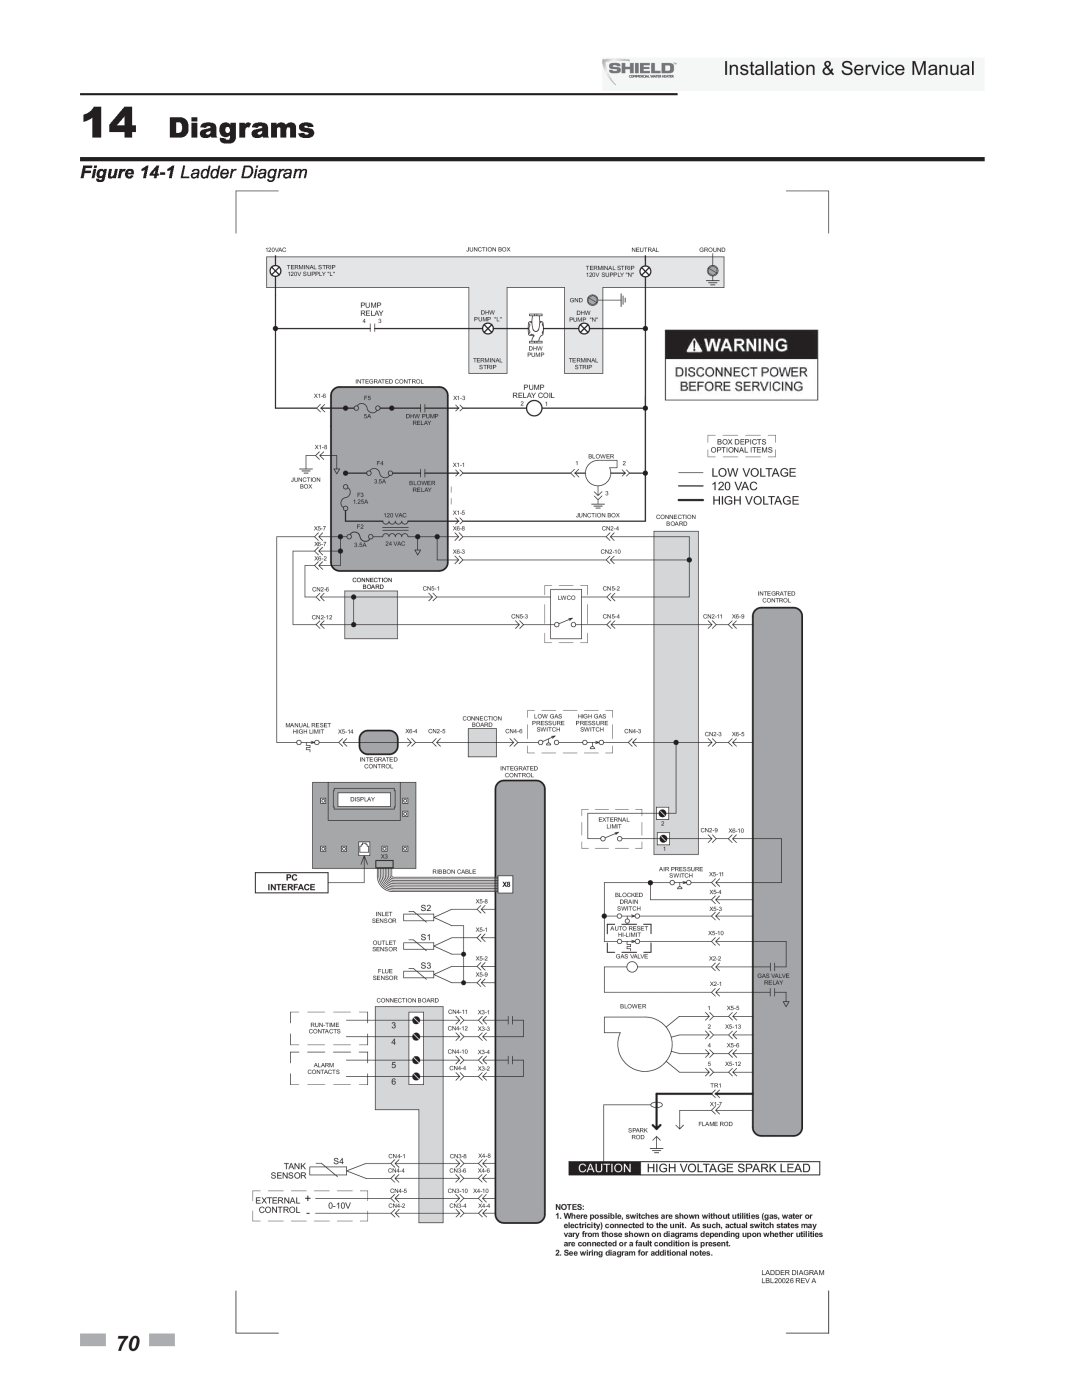 Lochinvar SNA500-125 Diagrams, Installation & Service Manual, 1 Ladder Diagram, Pump, Box Depicts, Optional Items, Tank 